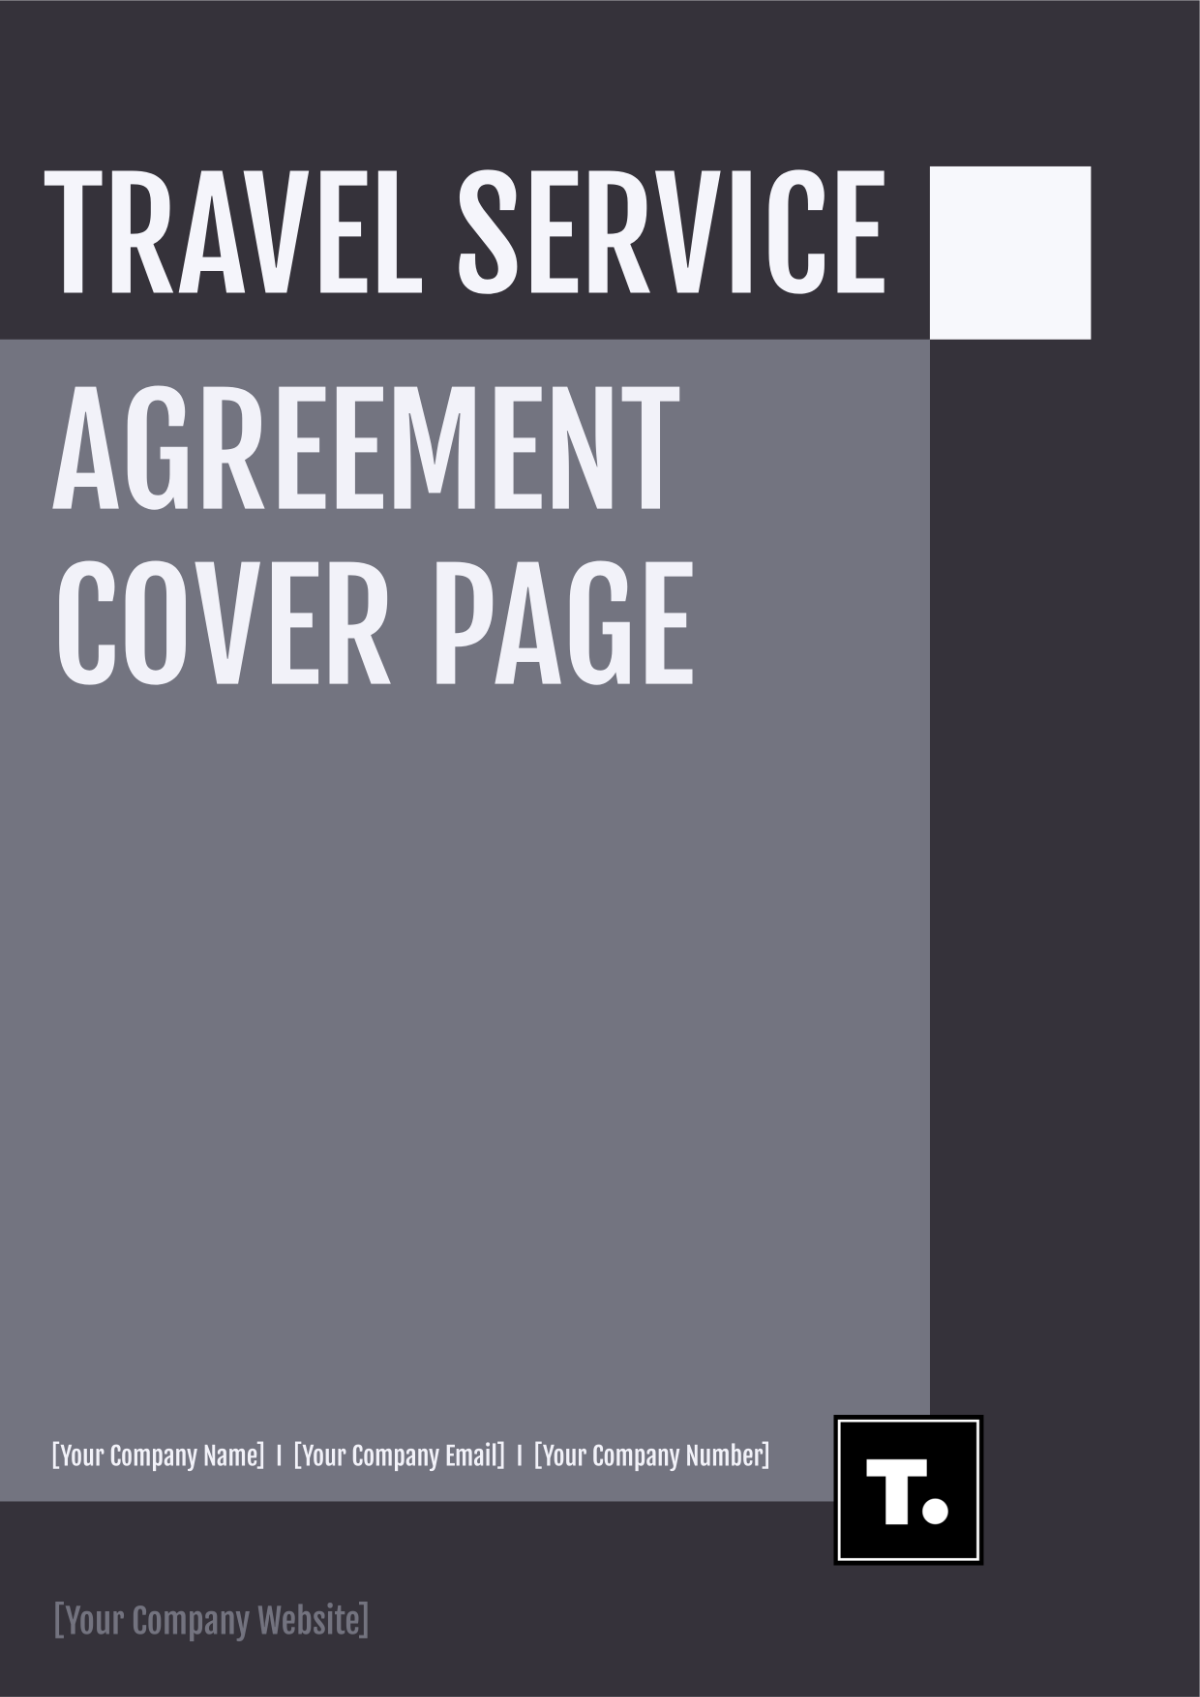 Travel Service Agreement